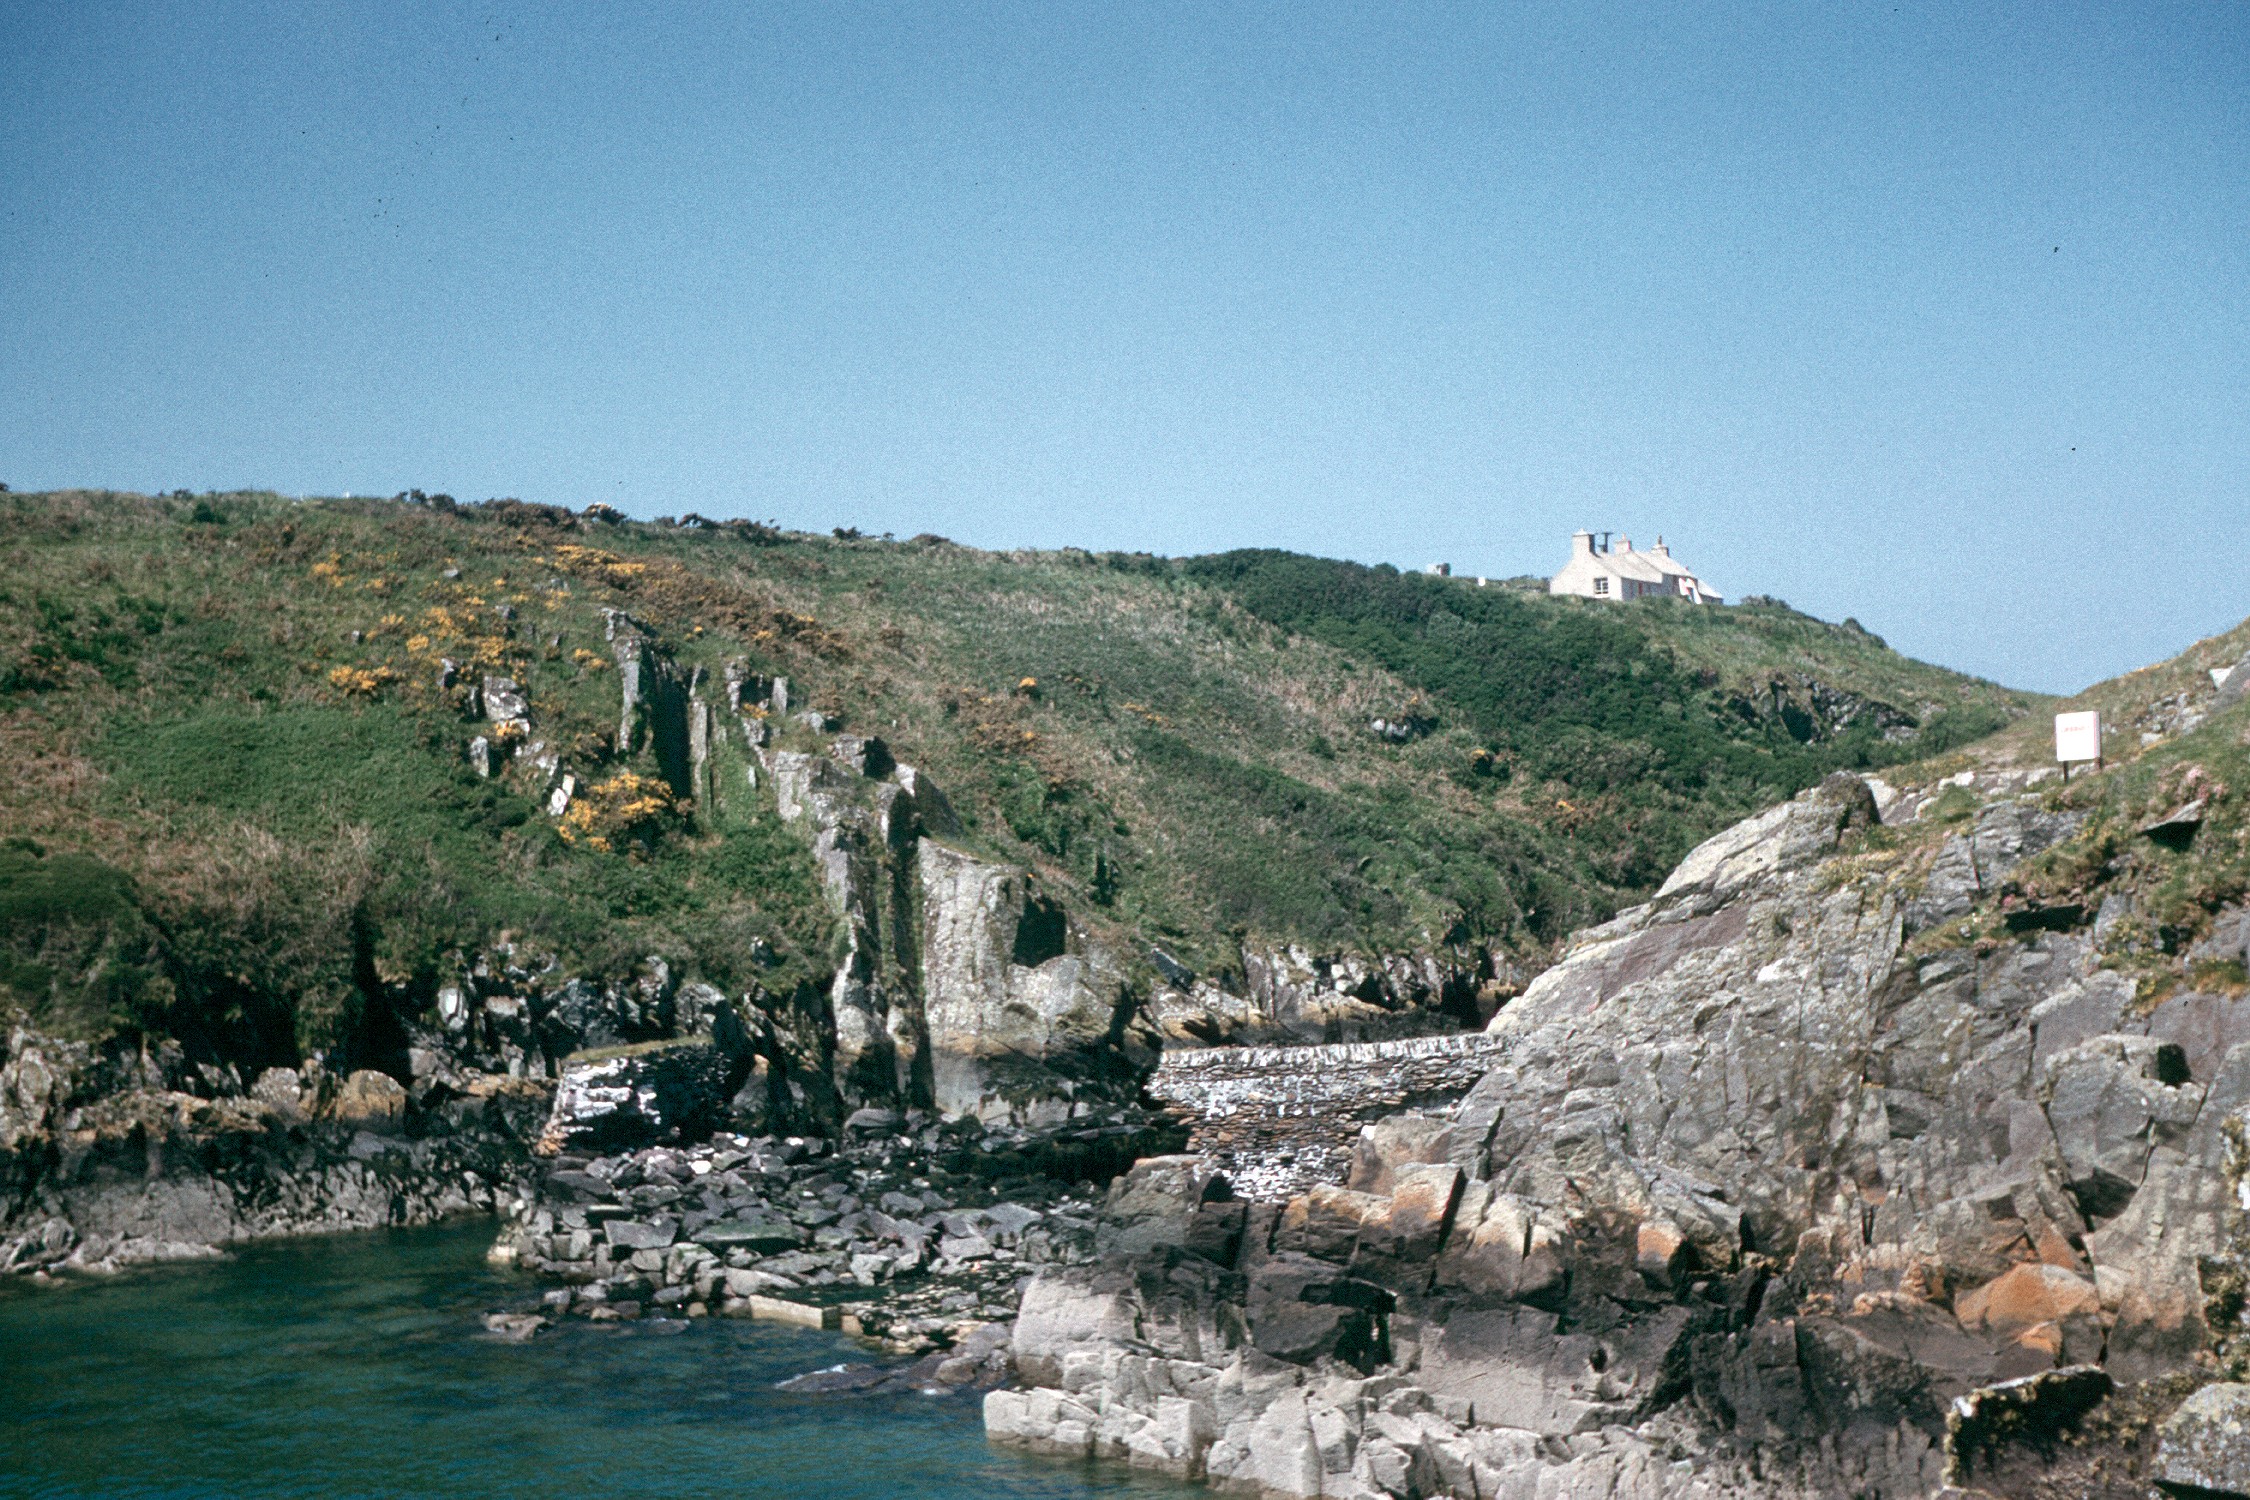 6300635s July 1963 - Porth Clais near St Davids, Pembrokeshire.